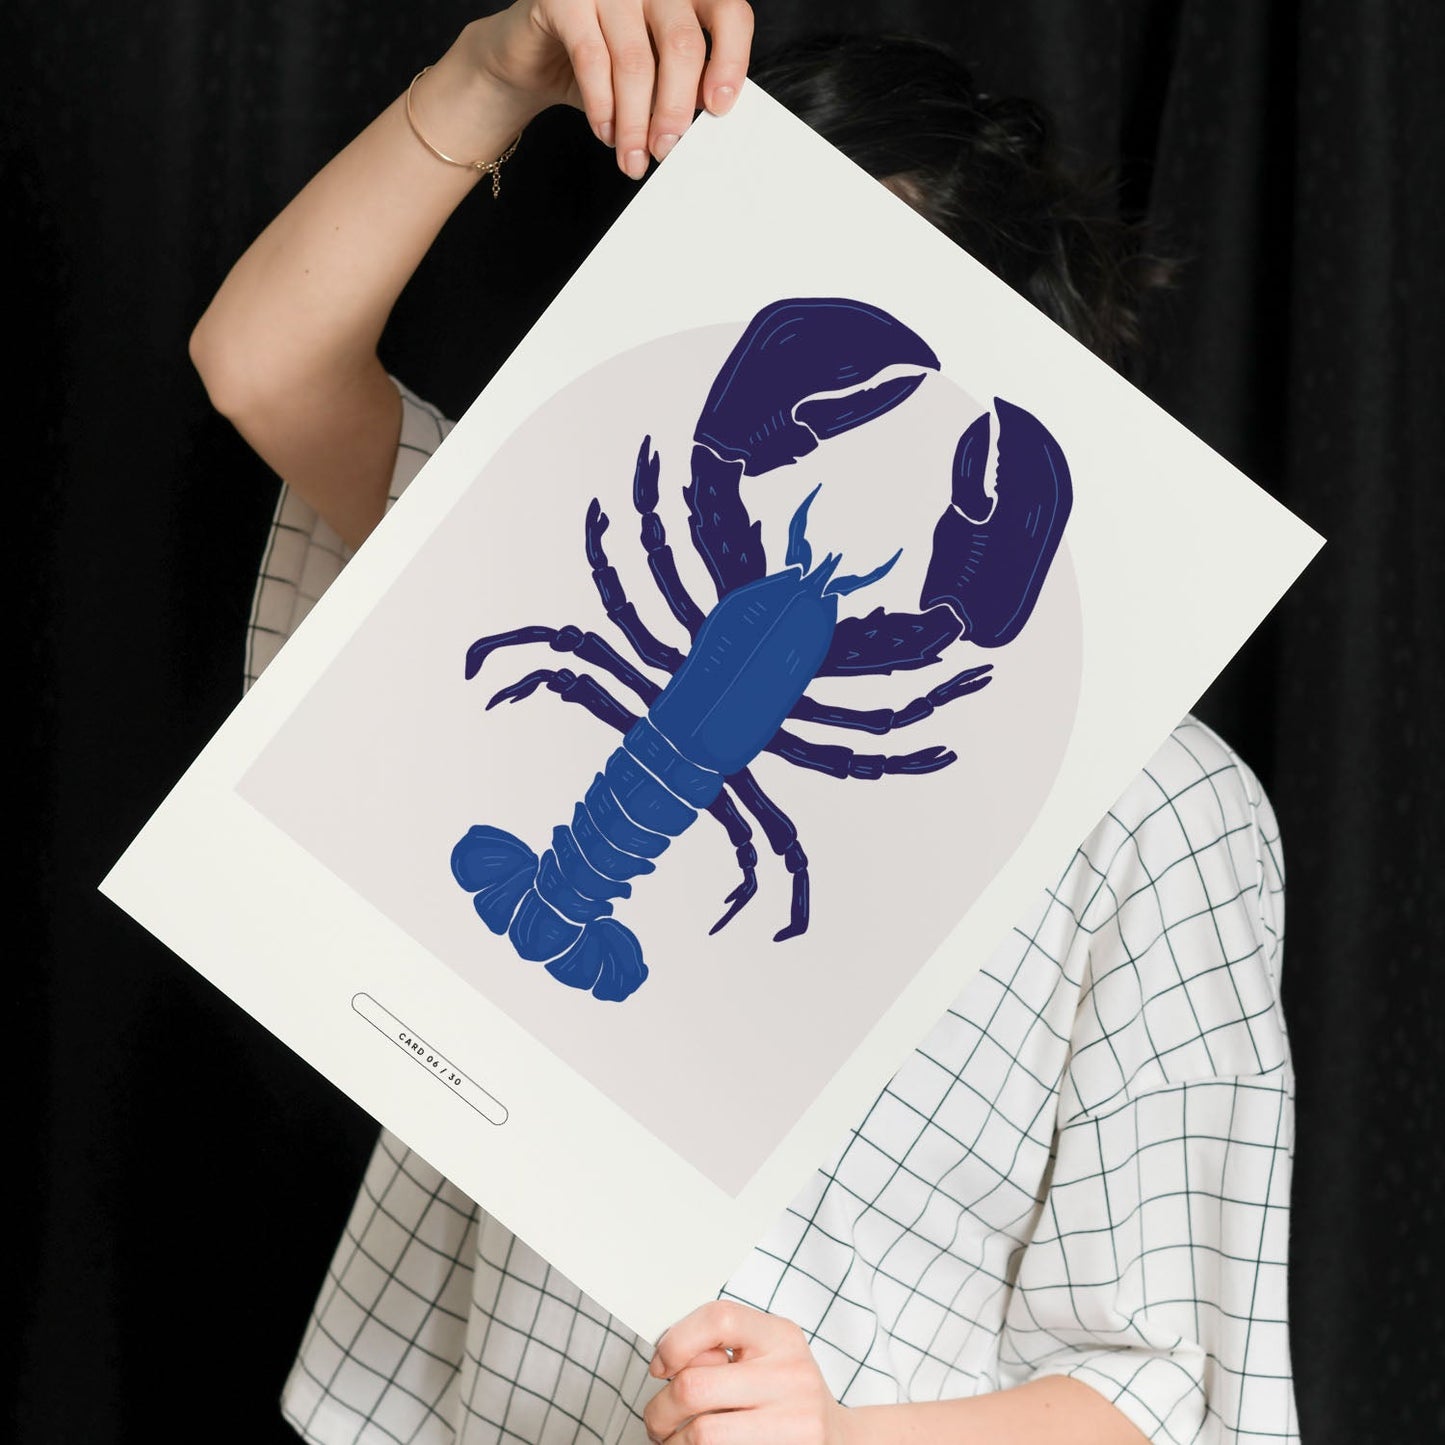 Lobster-Artwork-Nacnic-Nacnic Estudio SL